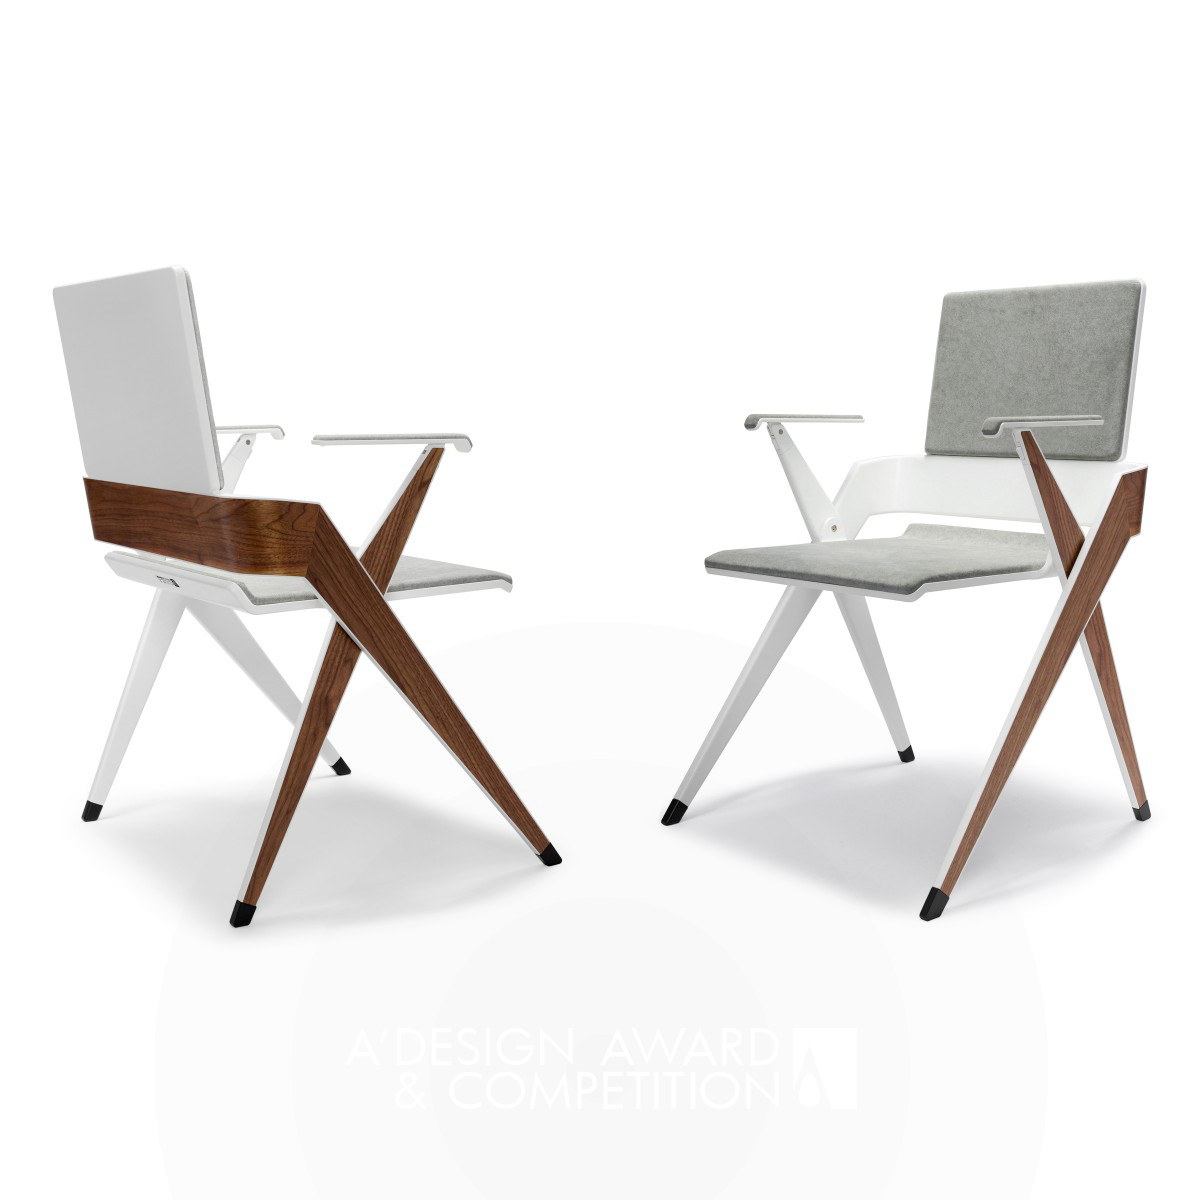 Crisscross Folding Chair by Cameron Smith